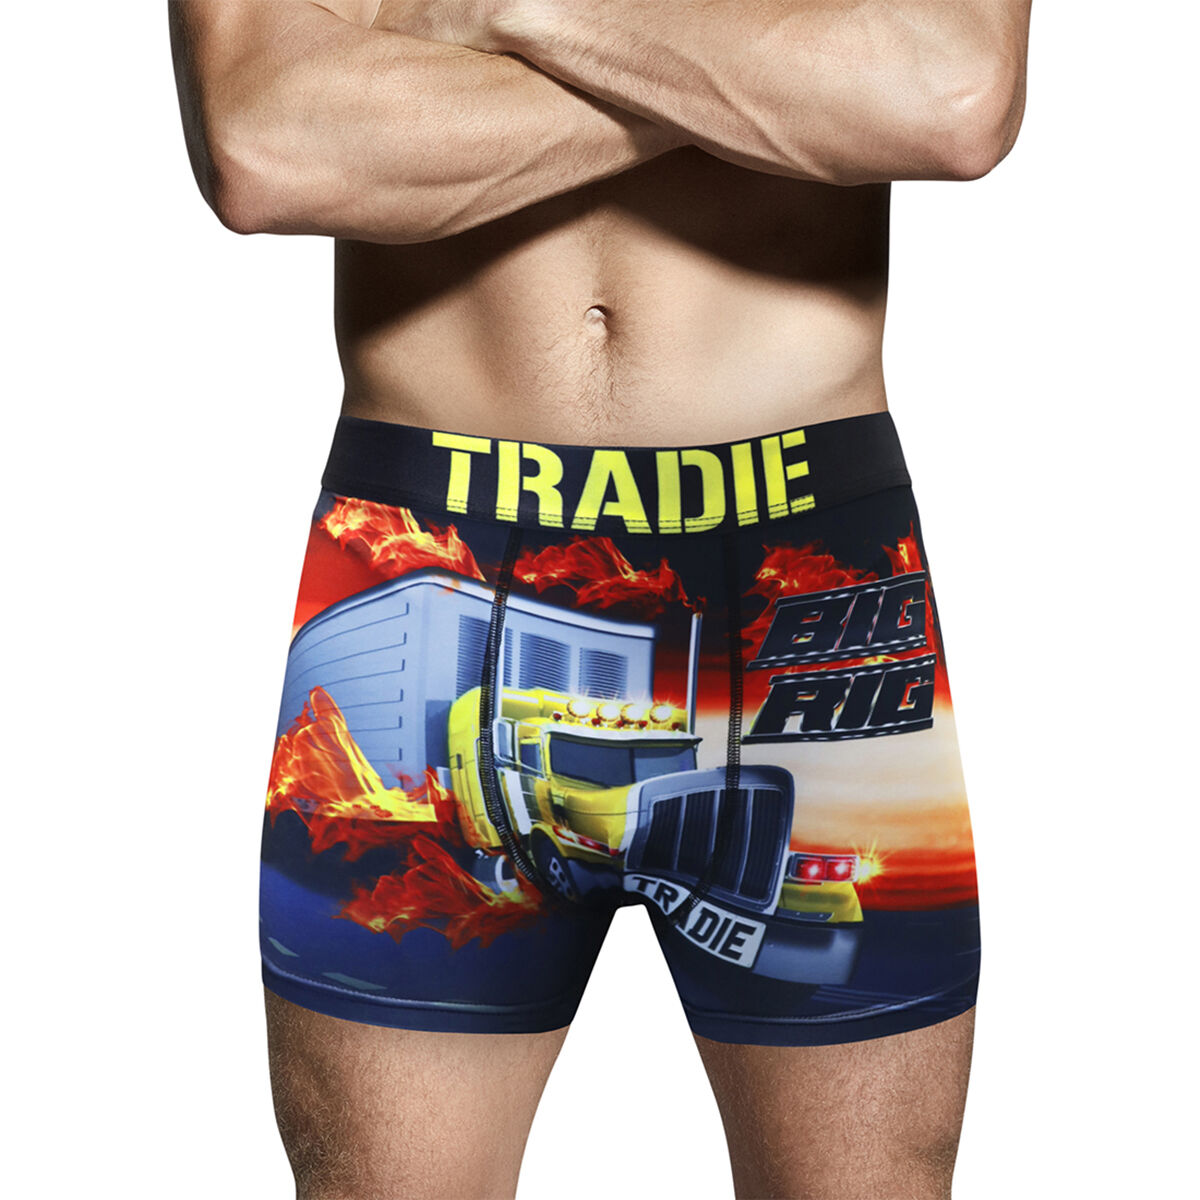 Buy 3x Mens Tradie Underwear Quick Dry Trunk Undies - Assorted